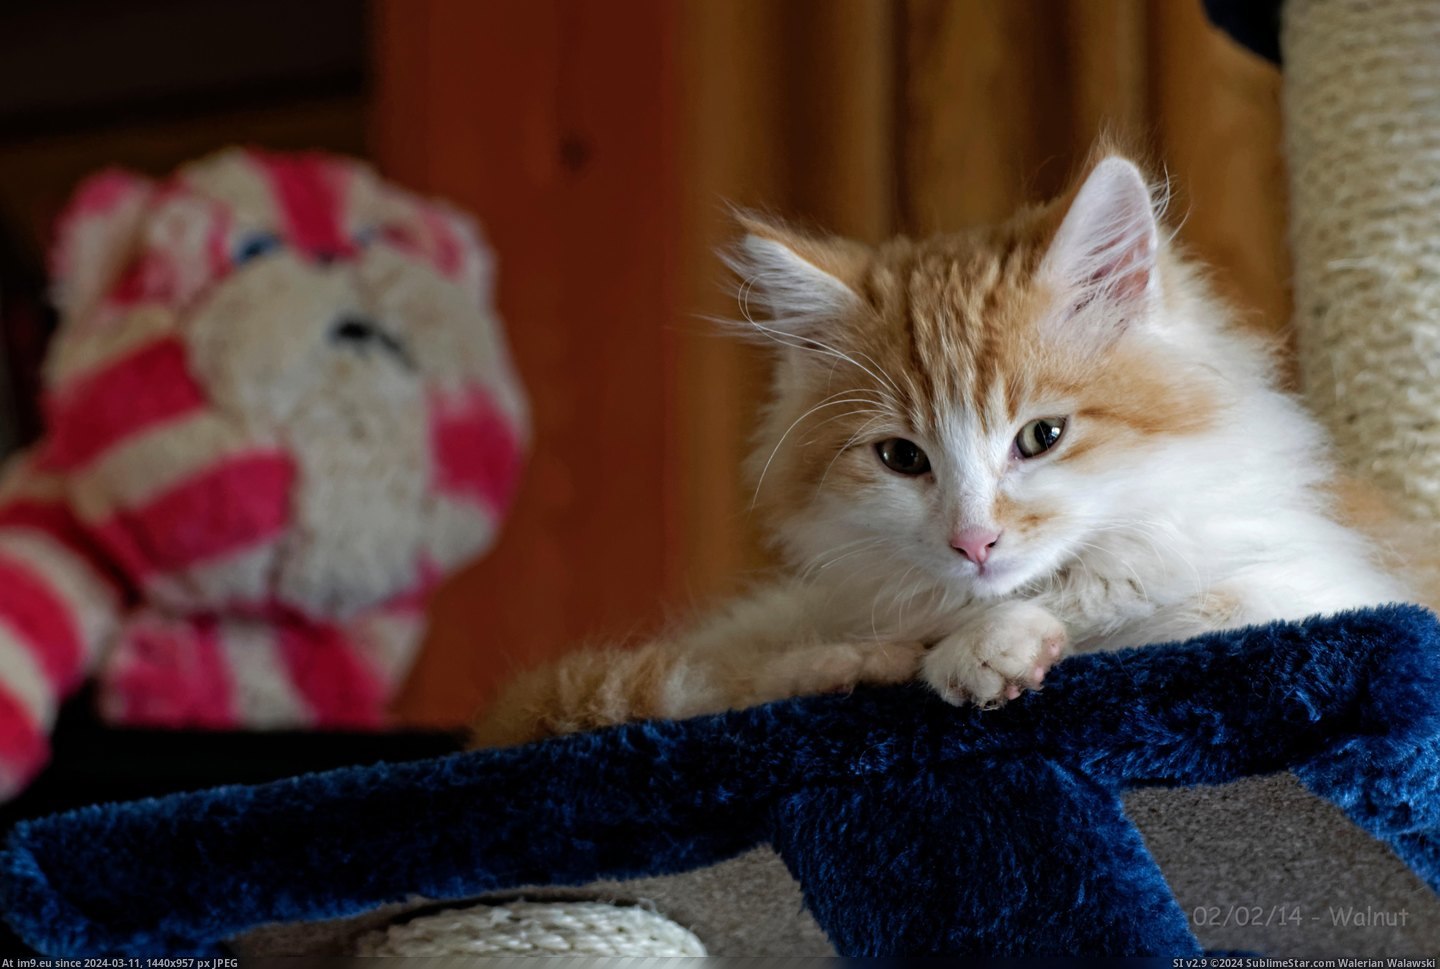 #Cats #Kitten #Walnut #Mistoffelees #Maine #Coon [Cats] My Maine Coon Kitten, Walnut Mistoffelees Pic. (Obraz z album My r/CATS favs))